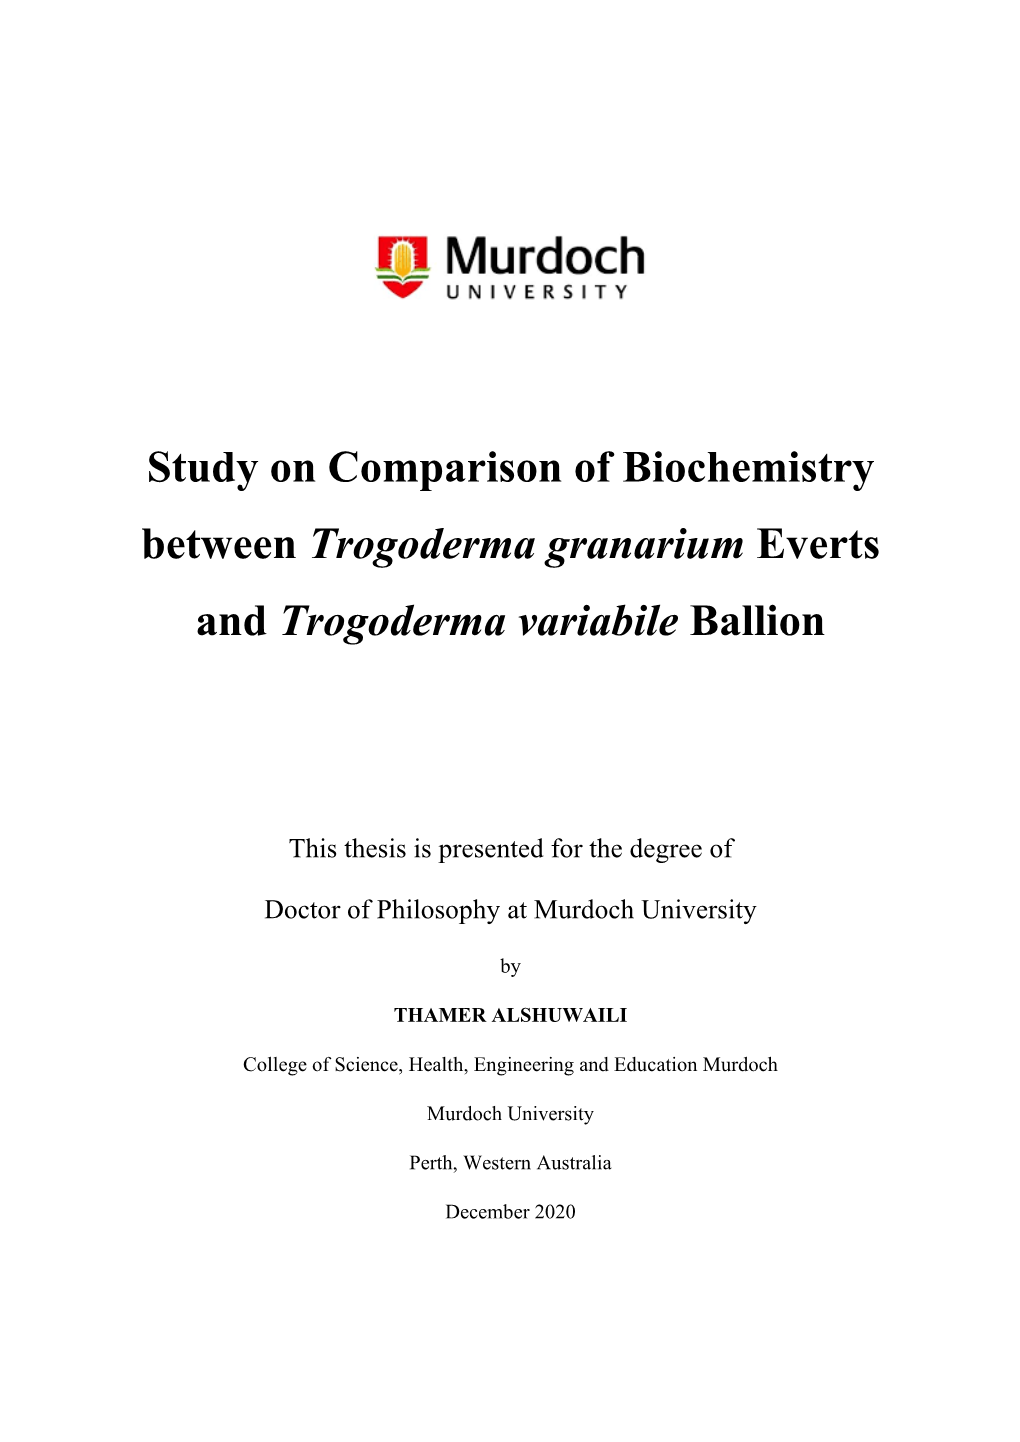 Study on Comparison of Biochemistry Between Trogoderma Granarium Everts and Trogoderma Variabile Ballion